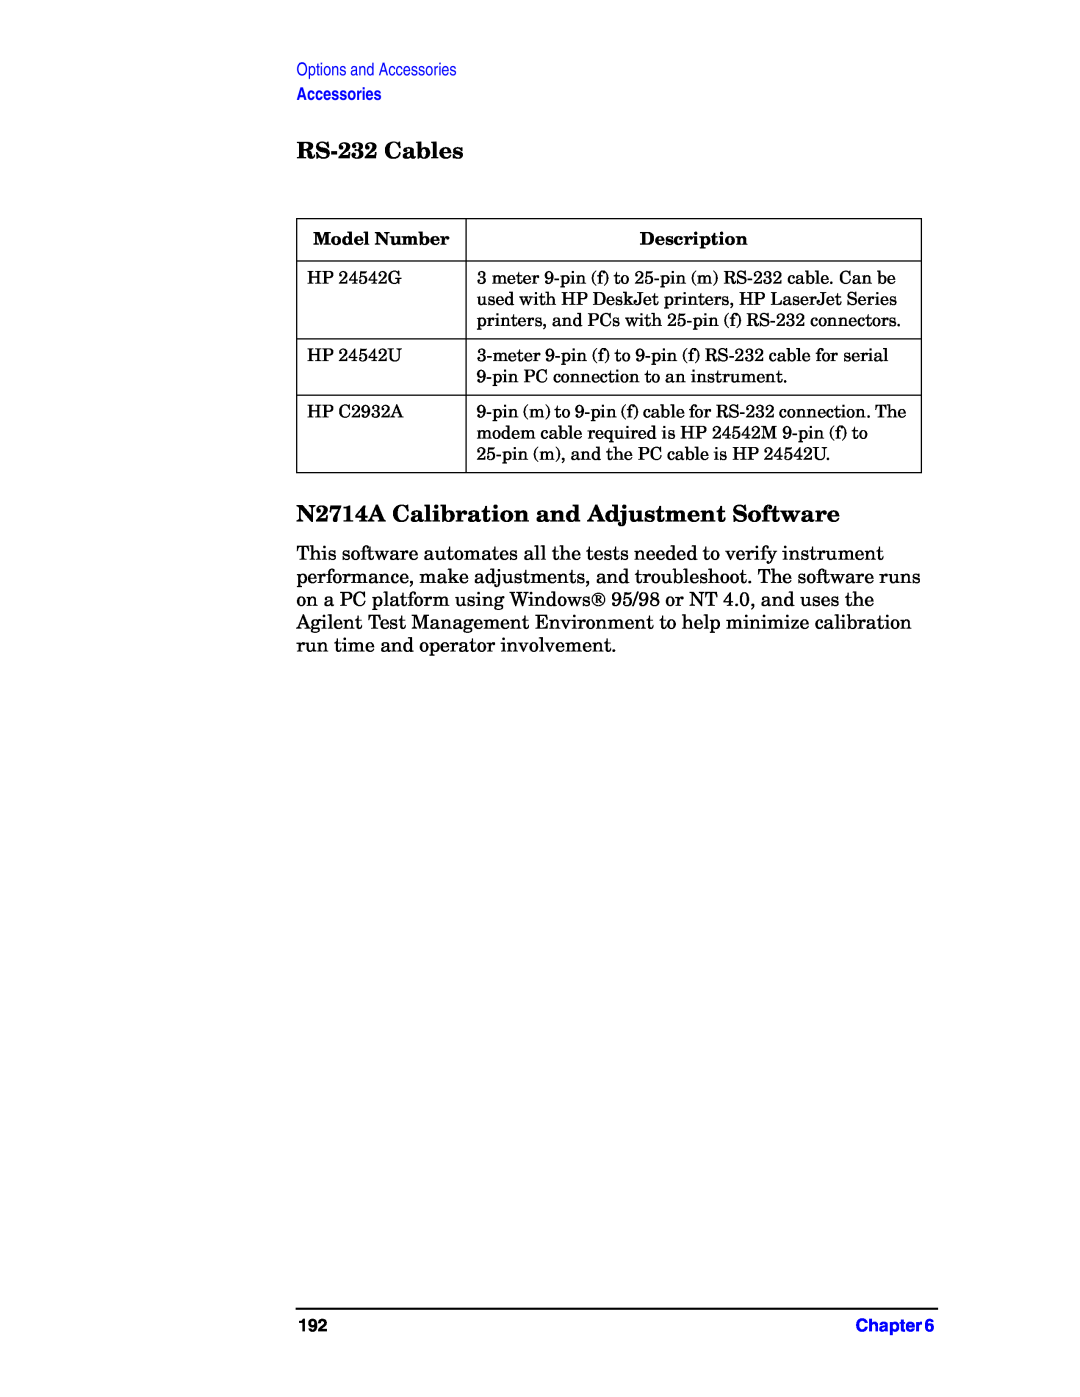 Agilent Technologies E4406A manual RS-232Cables, N2714A Calibration and Adjustment Software, Model Number, Description 